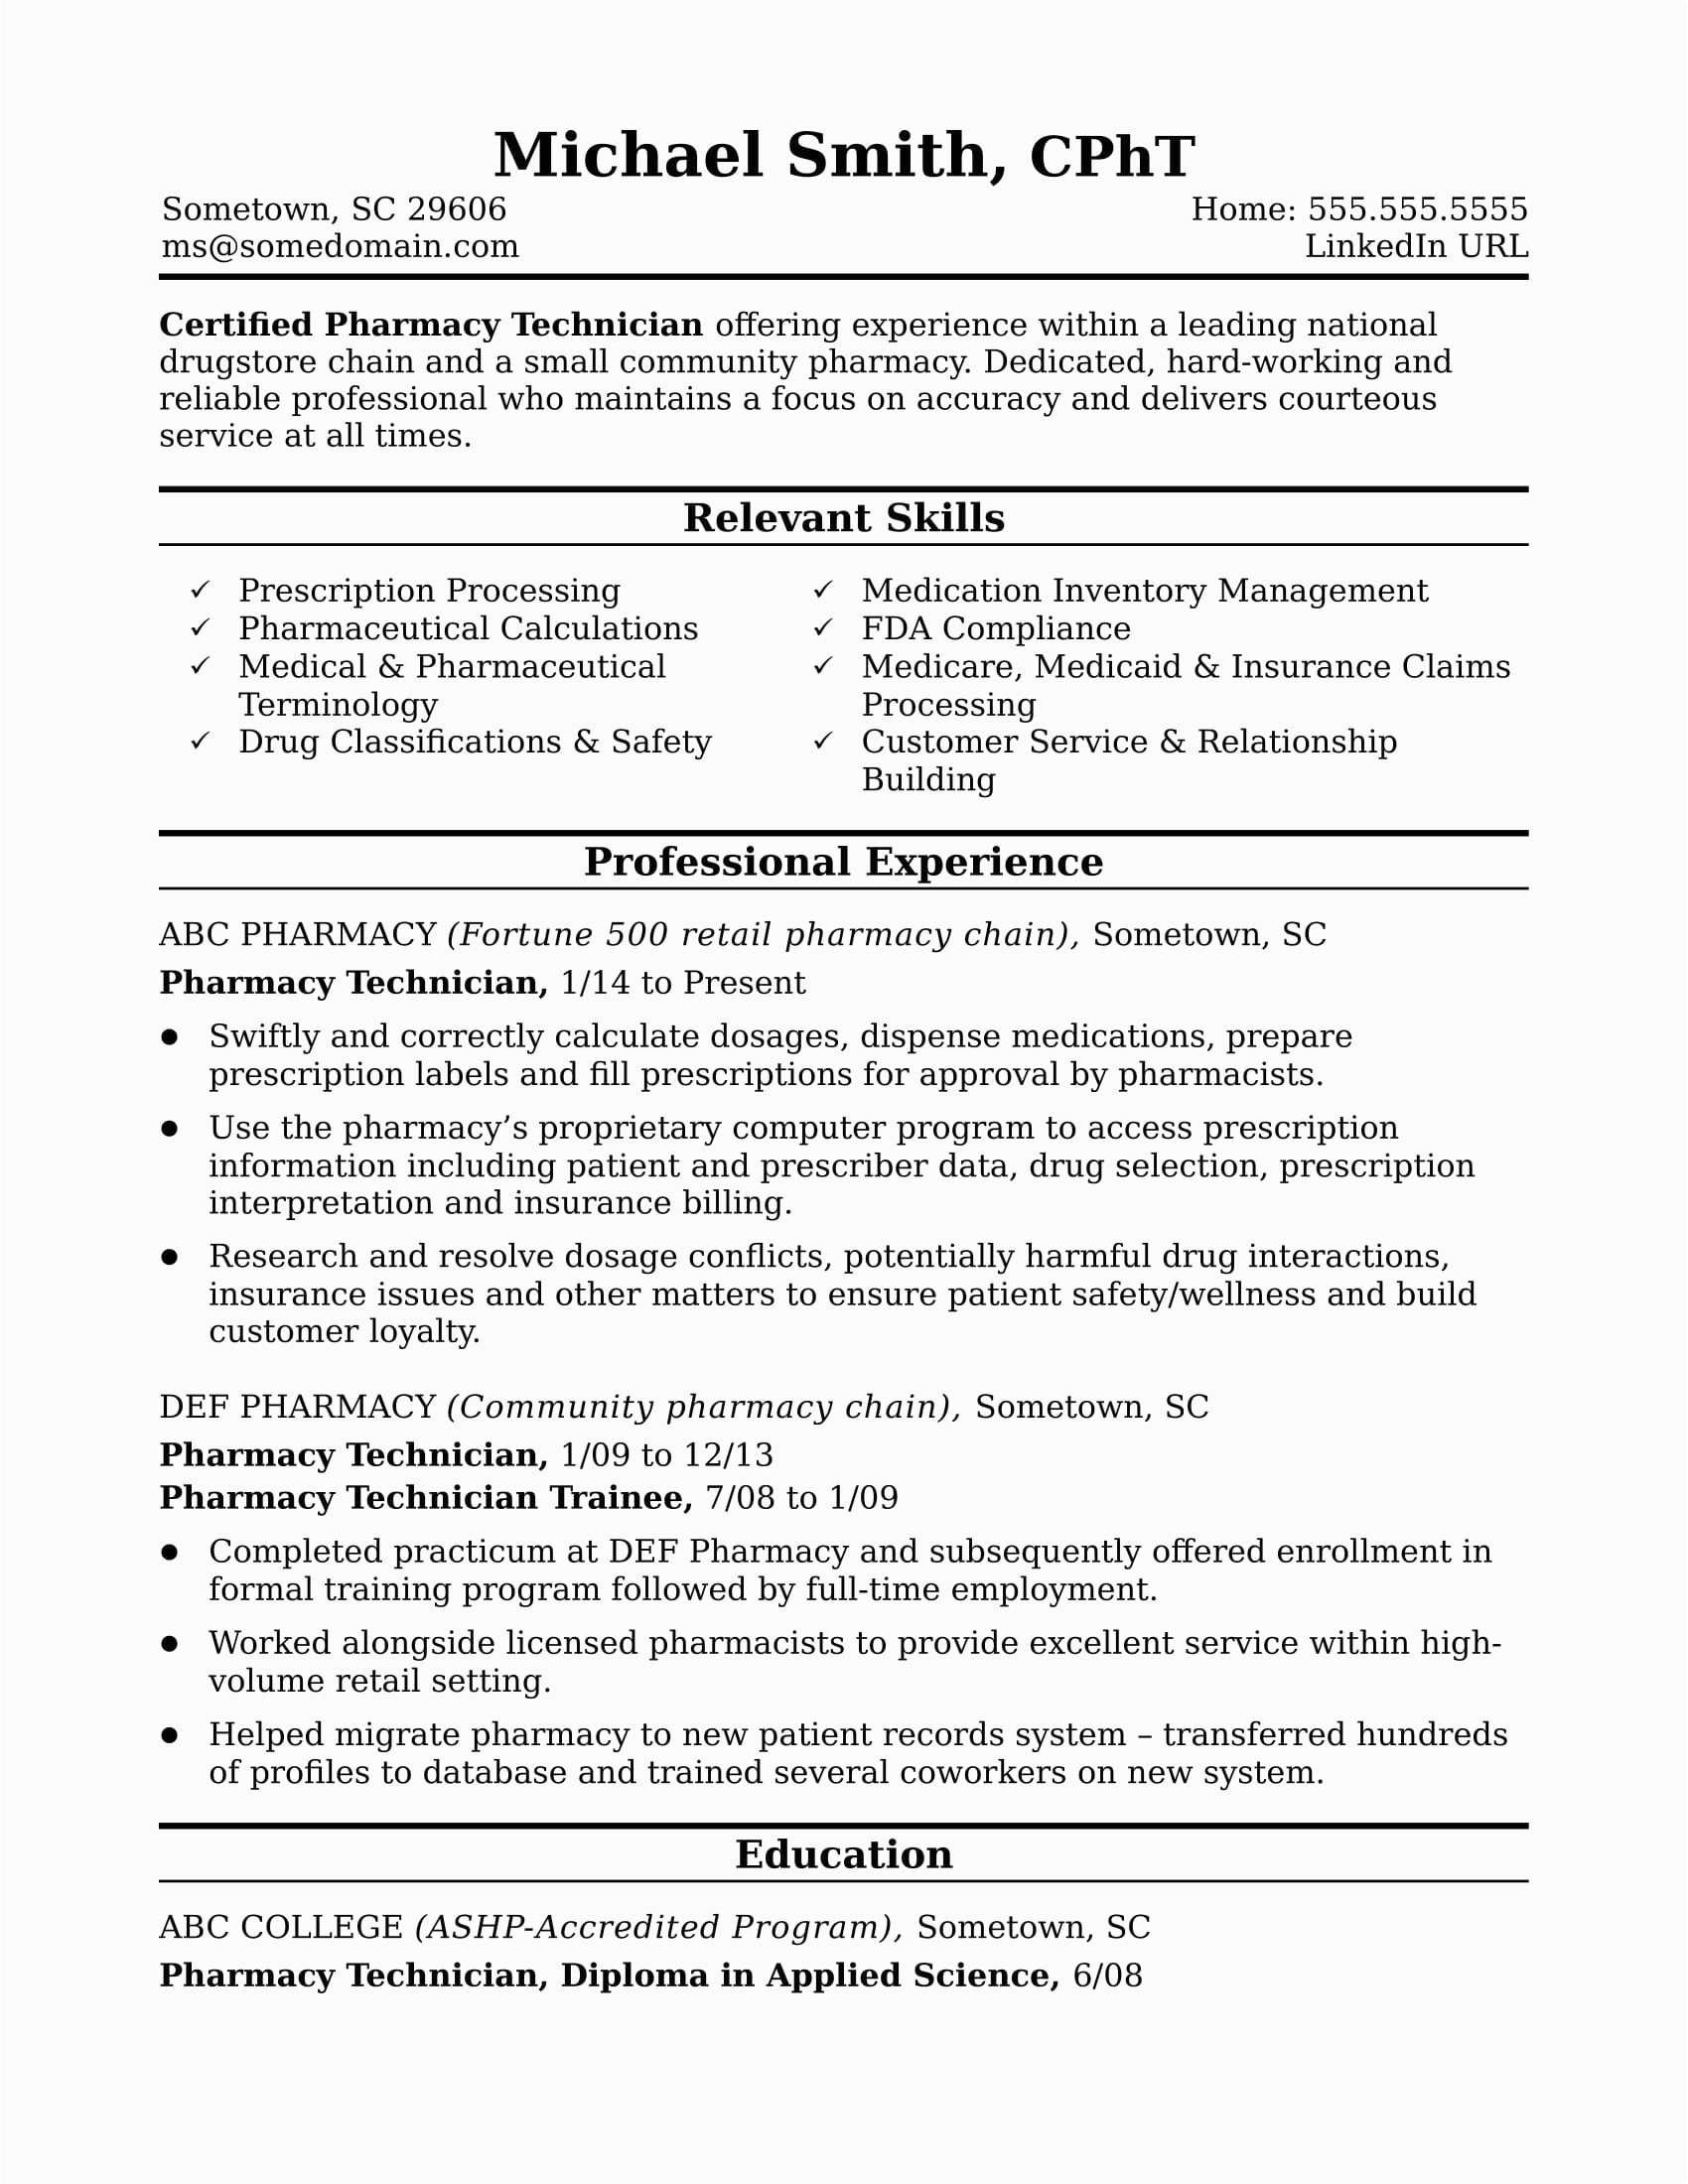 Operation and Maintenance Technician Resume Sample Monster Midlevel Pharmacy Technician Resume Sample